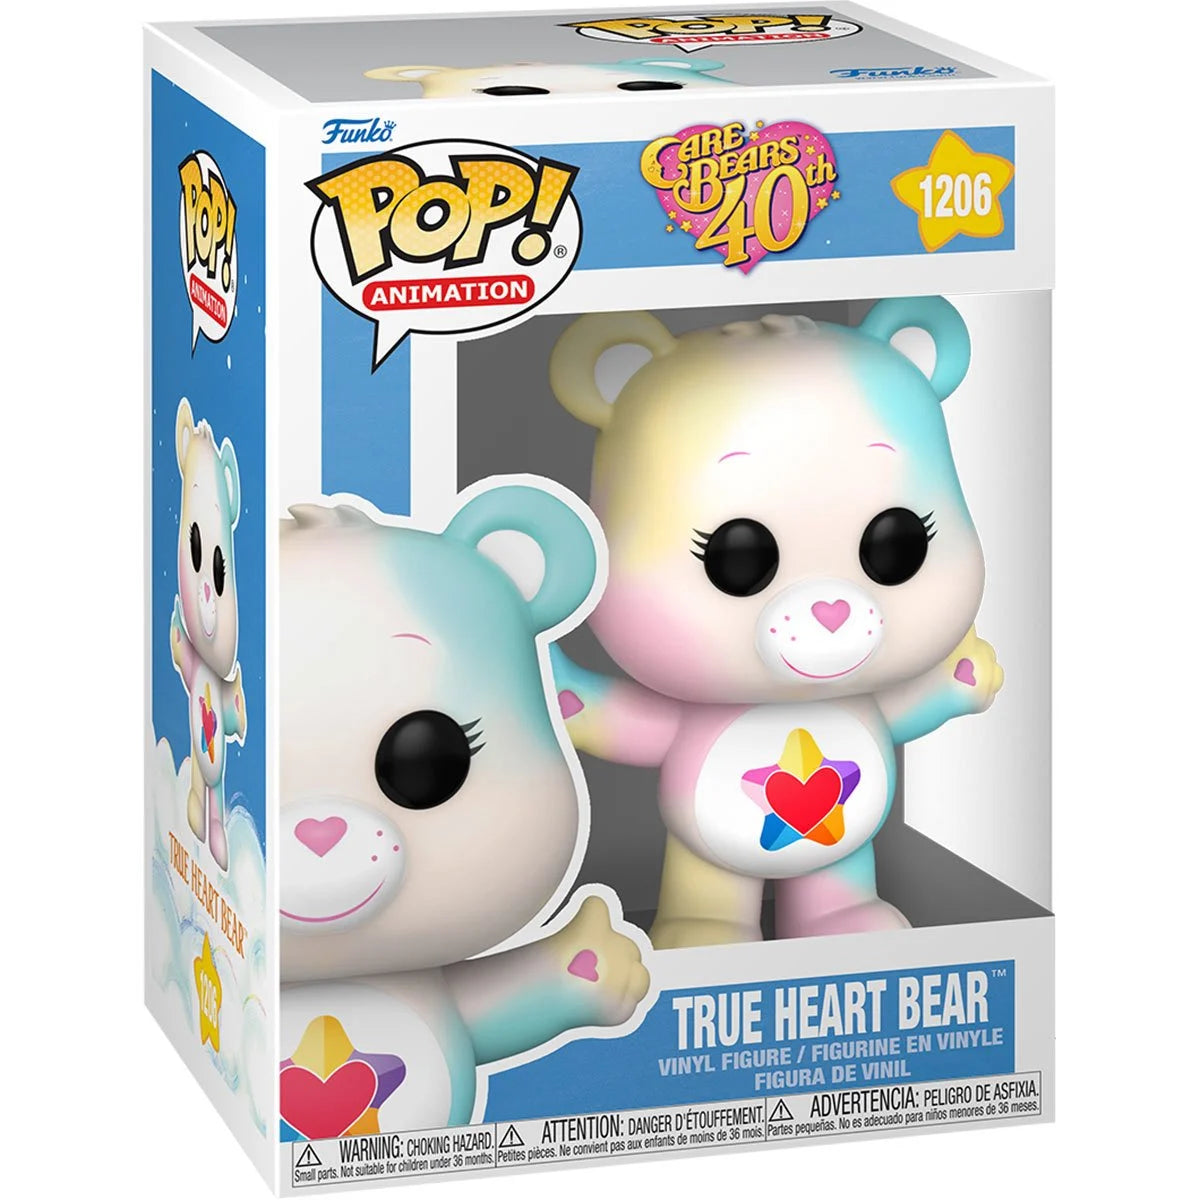 Care Bears 40th Anniversary True Heart Bear Funko Pop! Vinyl Figure #1206